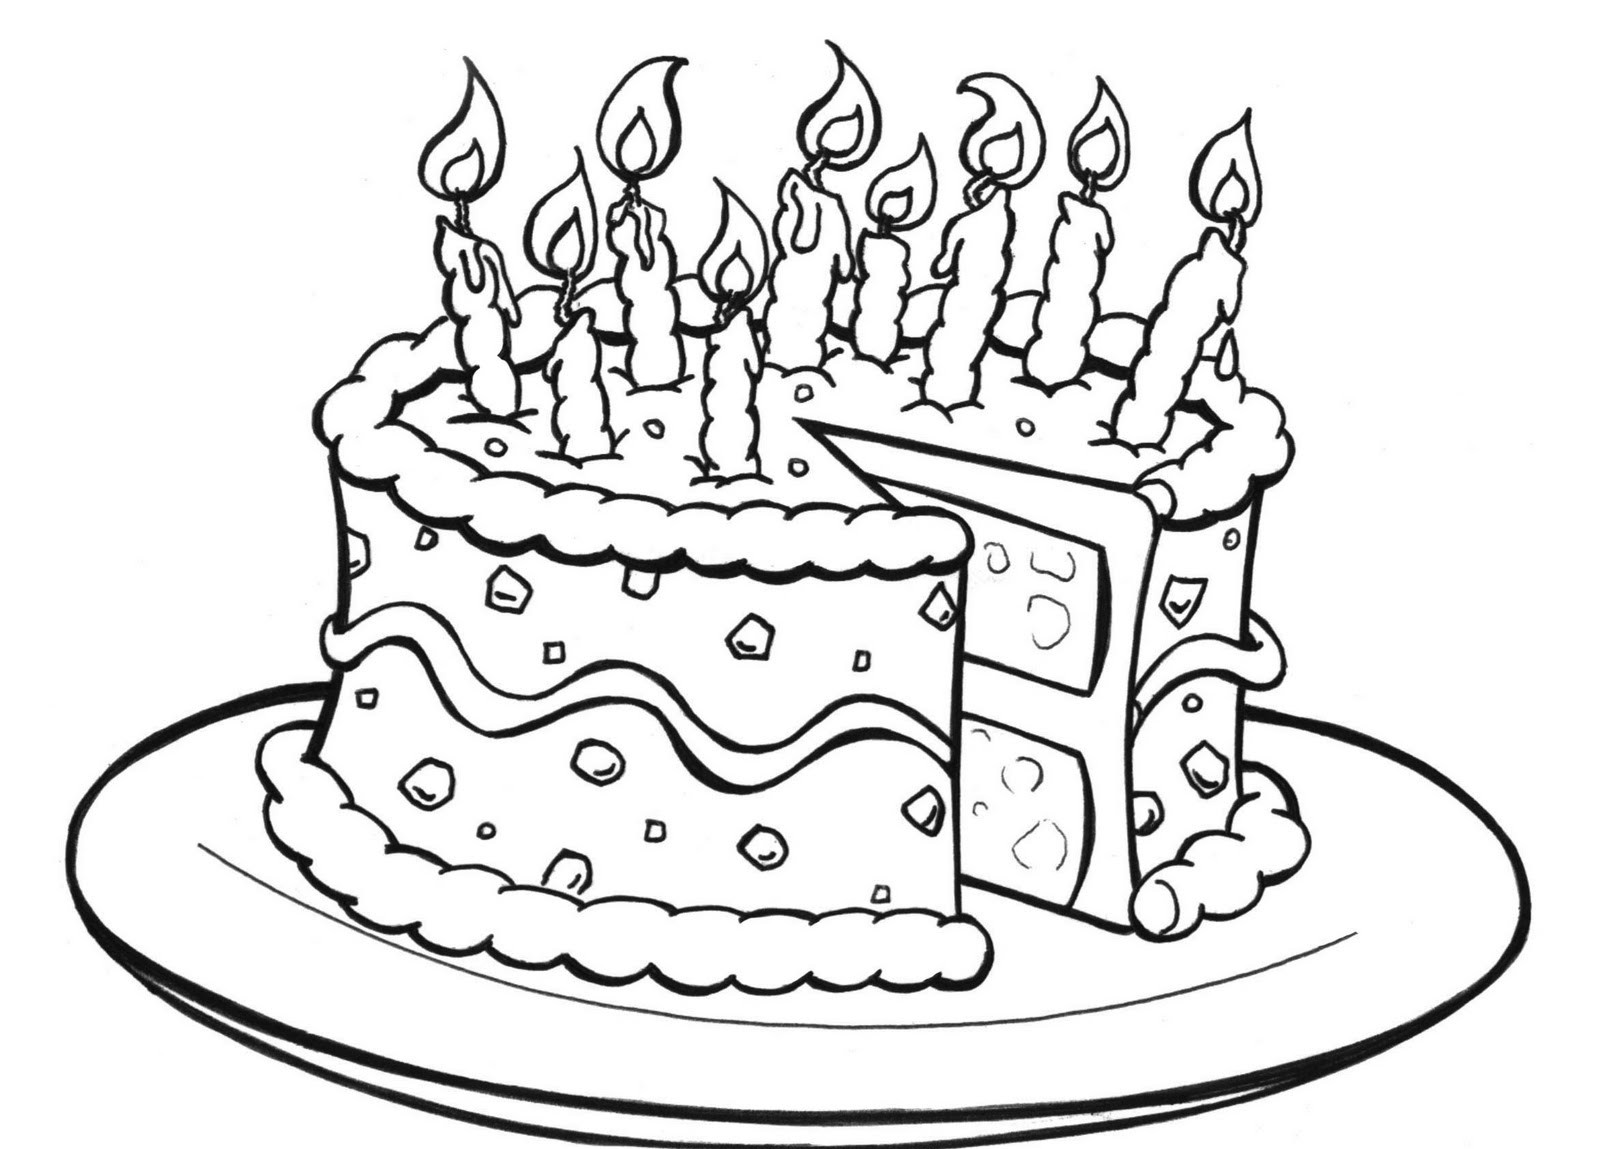 Free Happy Birthday Cake Doodle Vector - Download in Illustrator, EPS, SVG,  JPG, PNG | Template.net